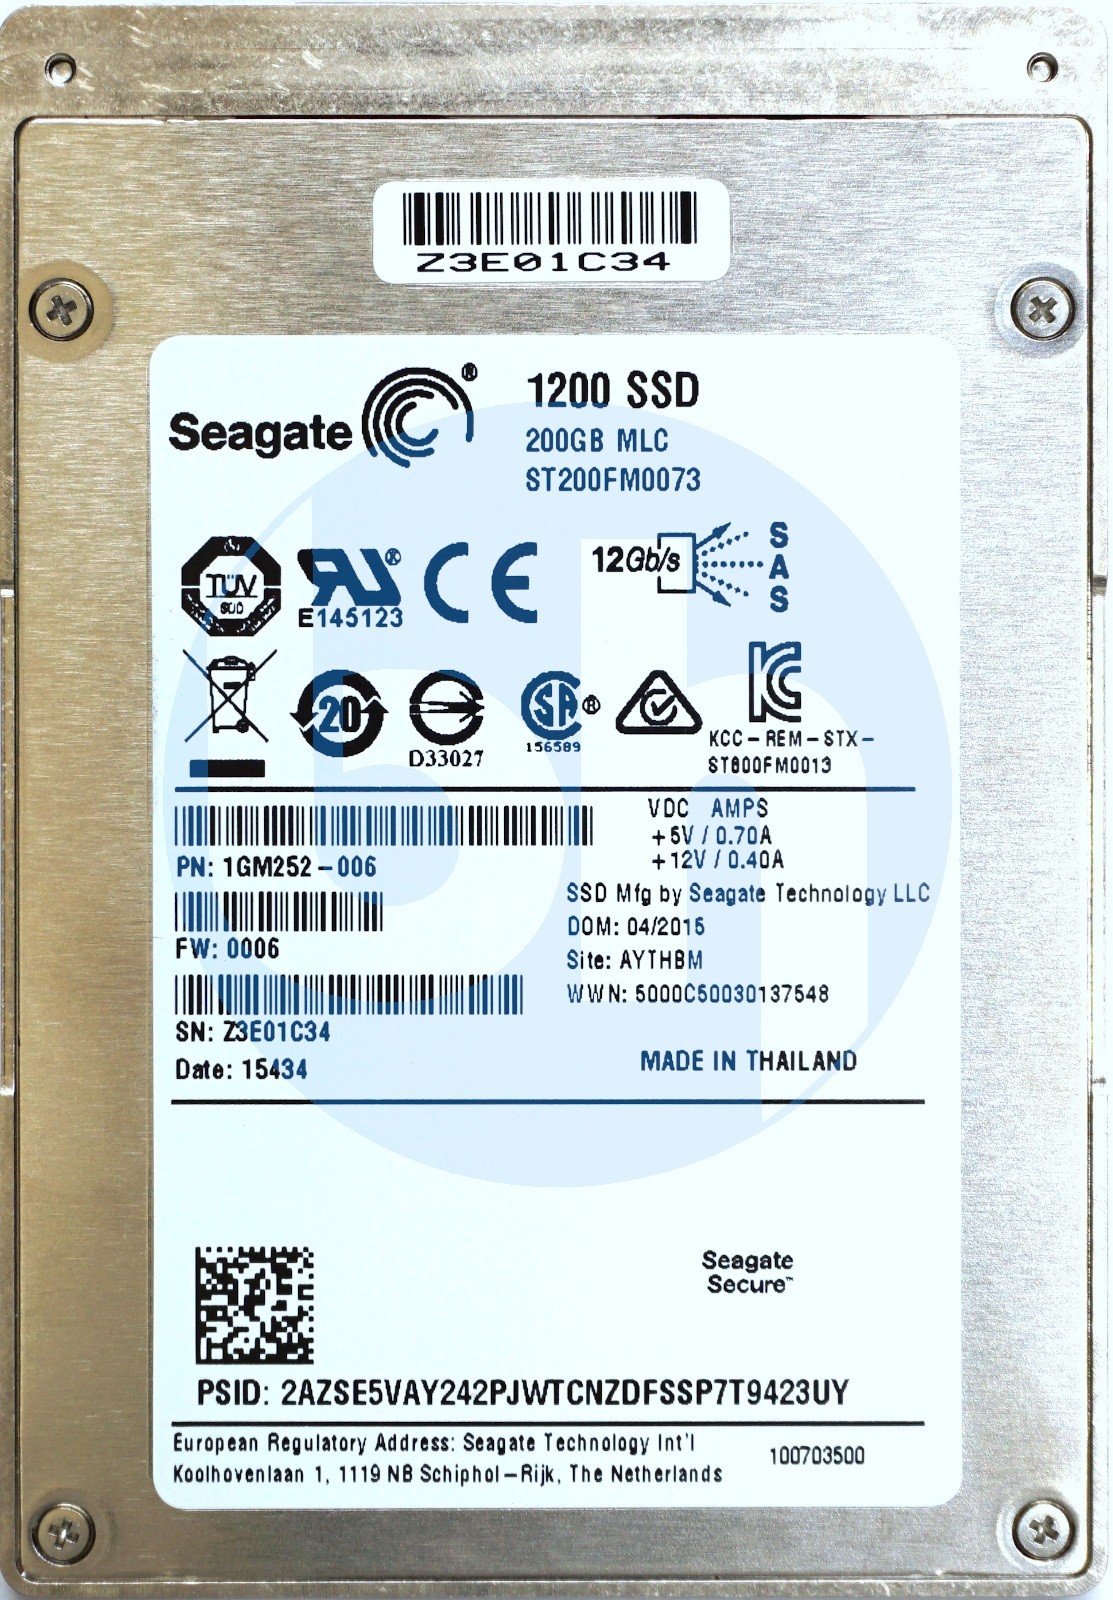 Seagate (ST200FM0073) 200GB 1200 SSD SAS-3 (2.5") 12Gbps SSD